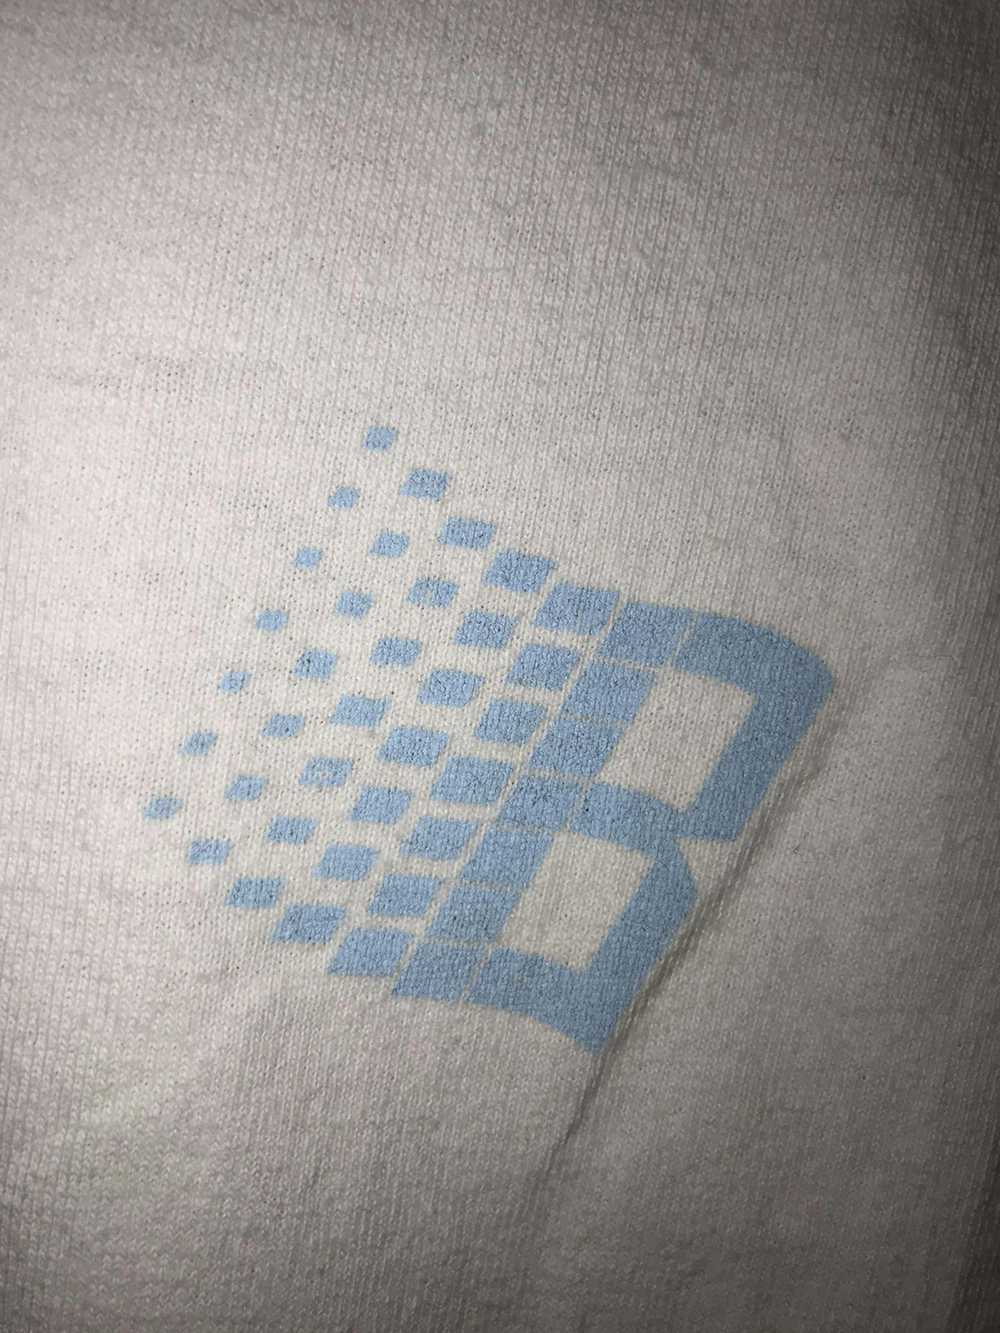 Bronze 56k Blue Microsoft Logo - image 4